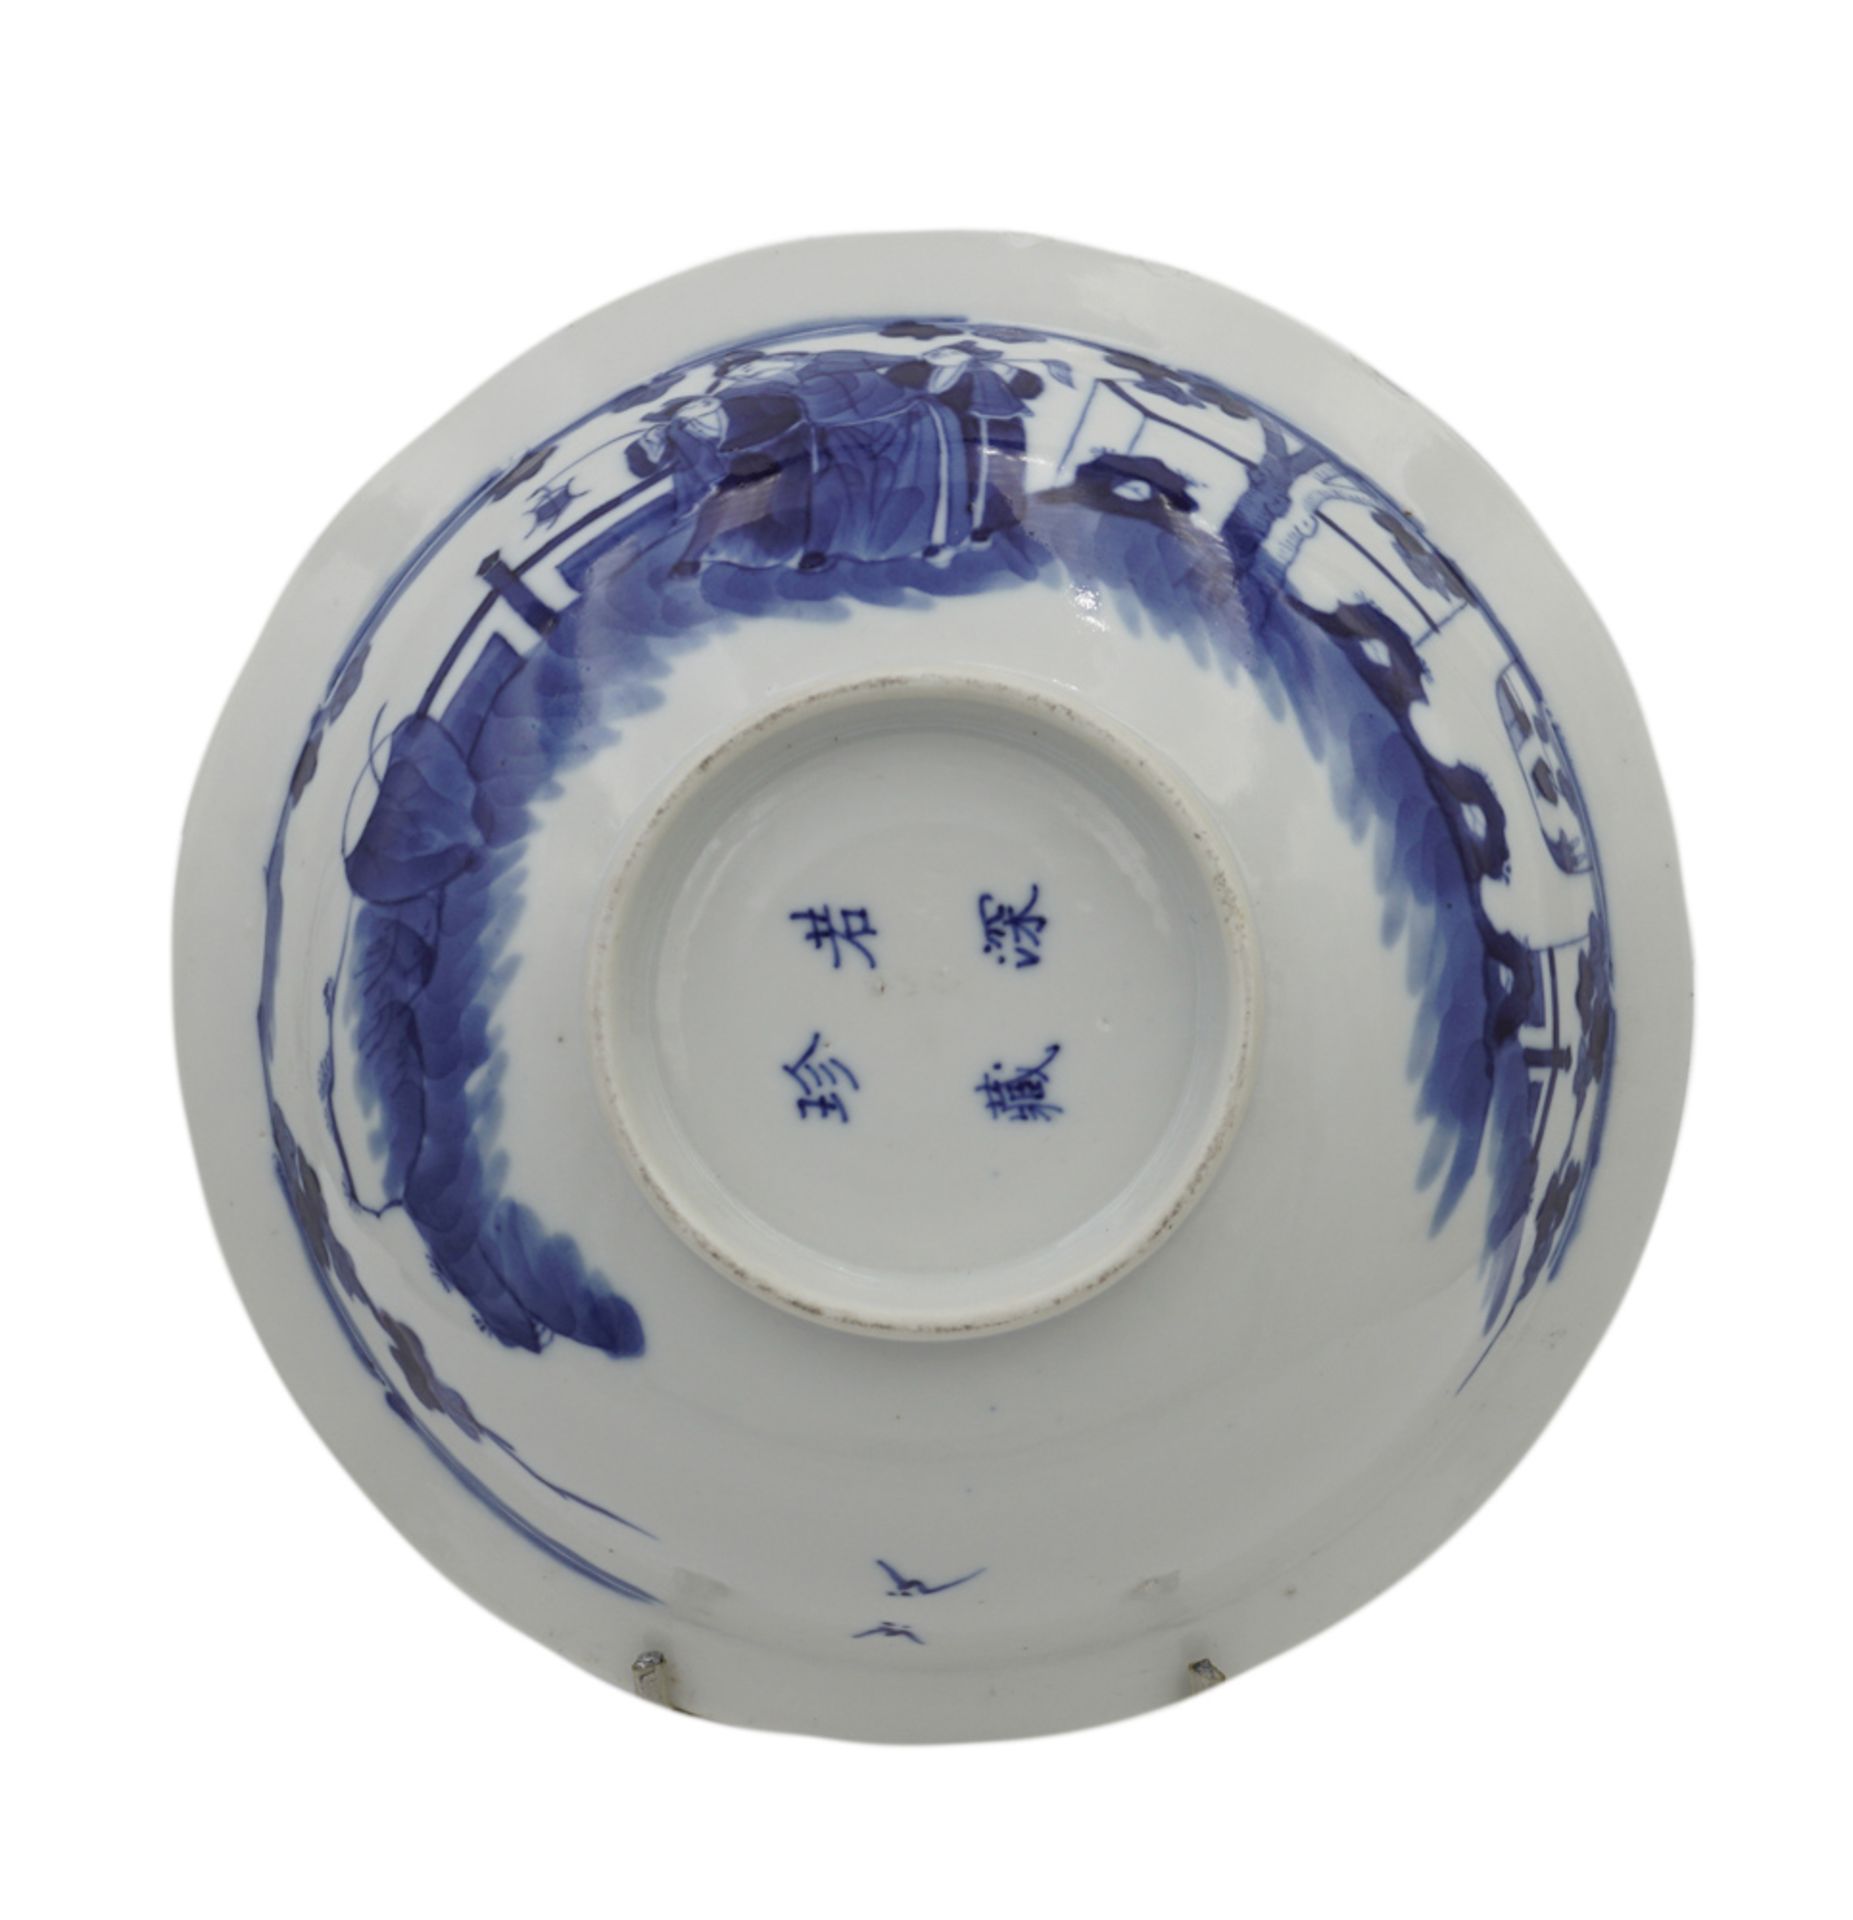 White and blue porcelain bowl China, 19th-20th century 6x19 cm. - Bild 2 aus 2